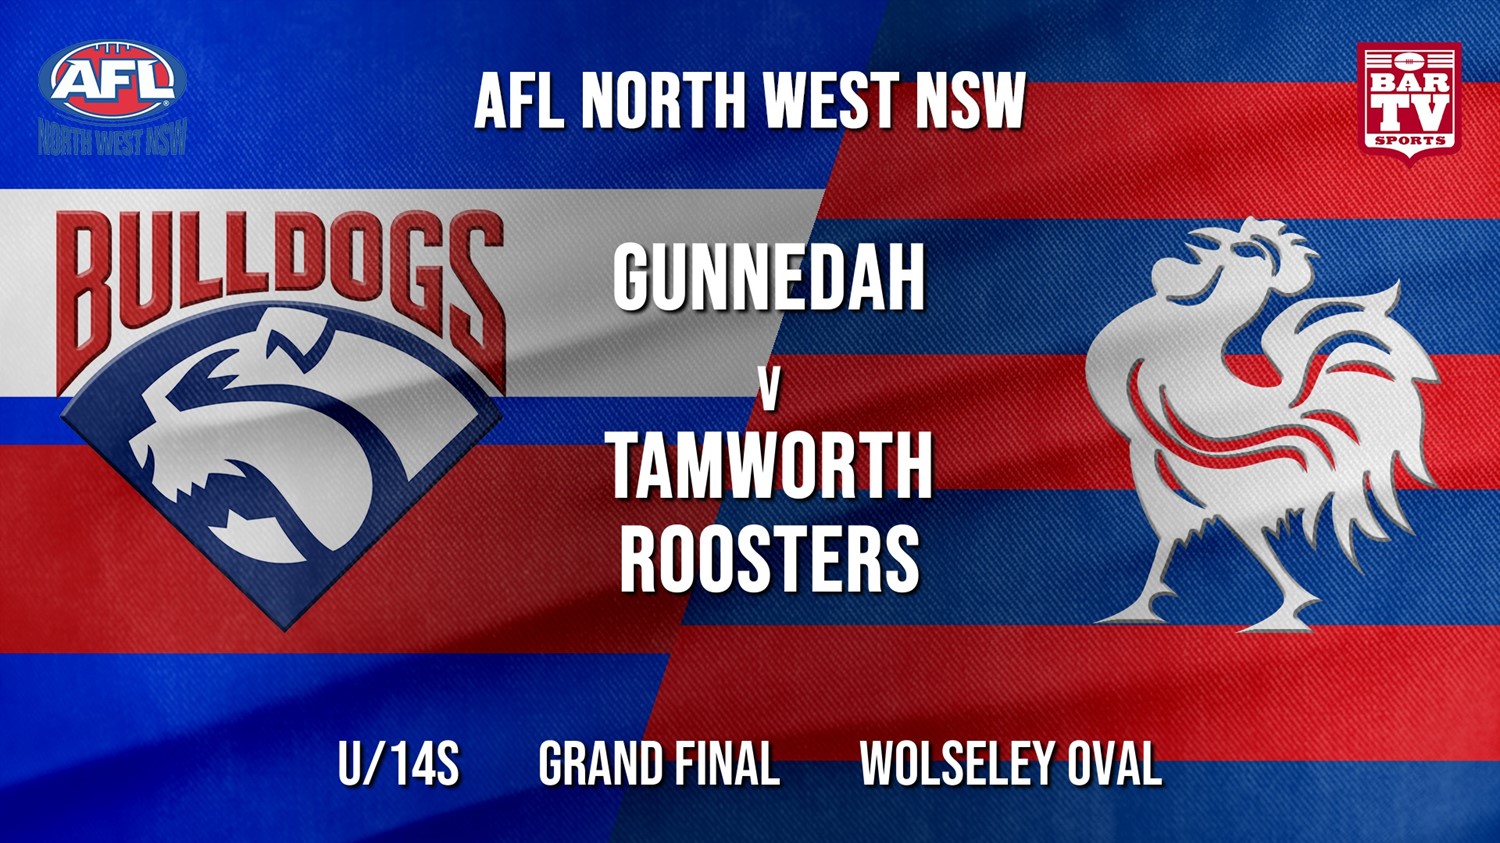 AFL North West - NSW Grand Final - U/14s - Gunnedah Bulldogs v Tamworth Roosters (1) Minigame Slate Image